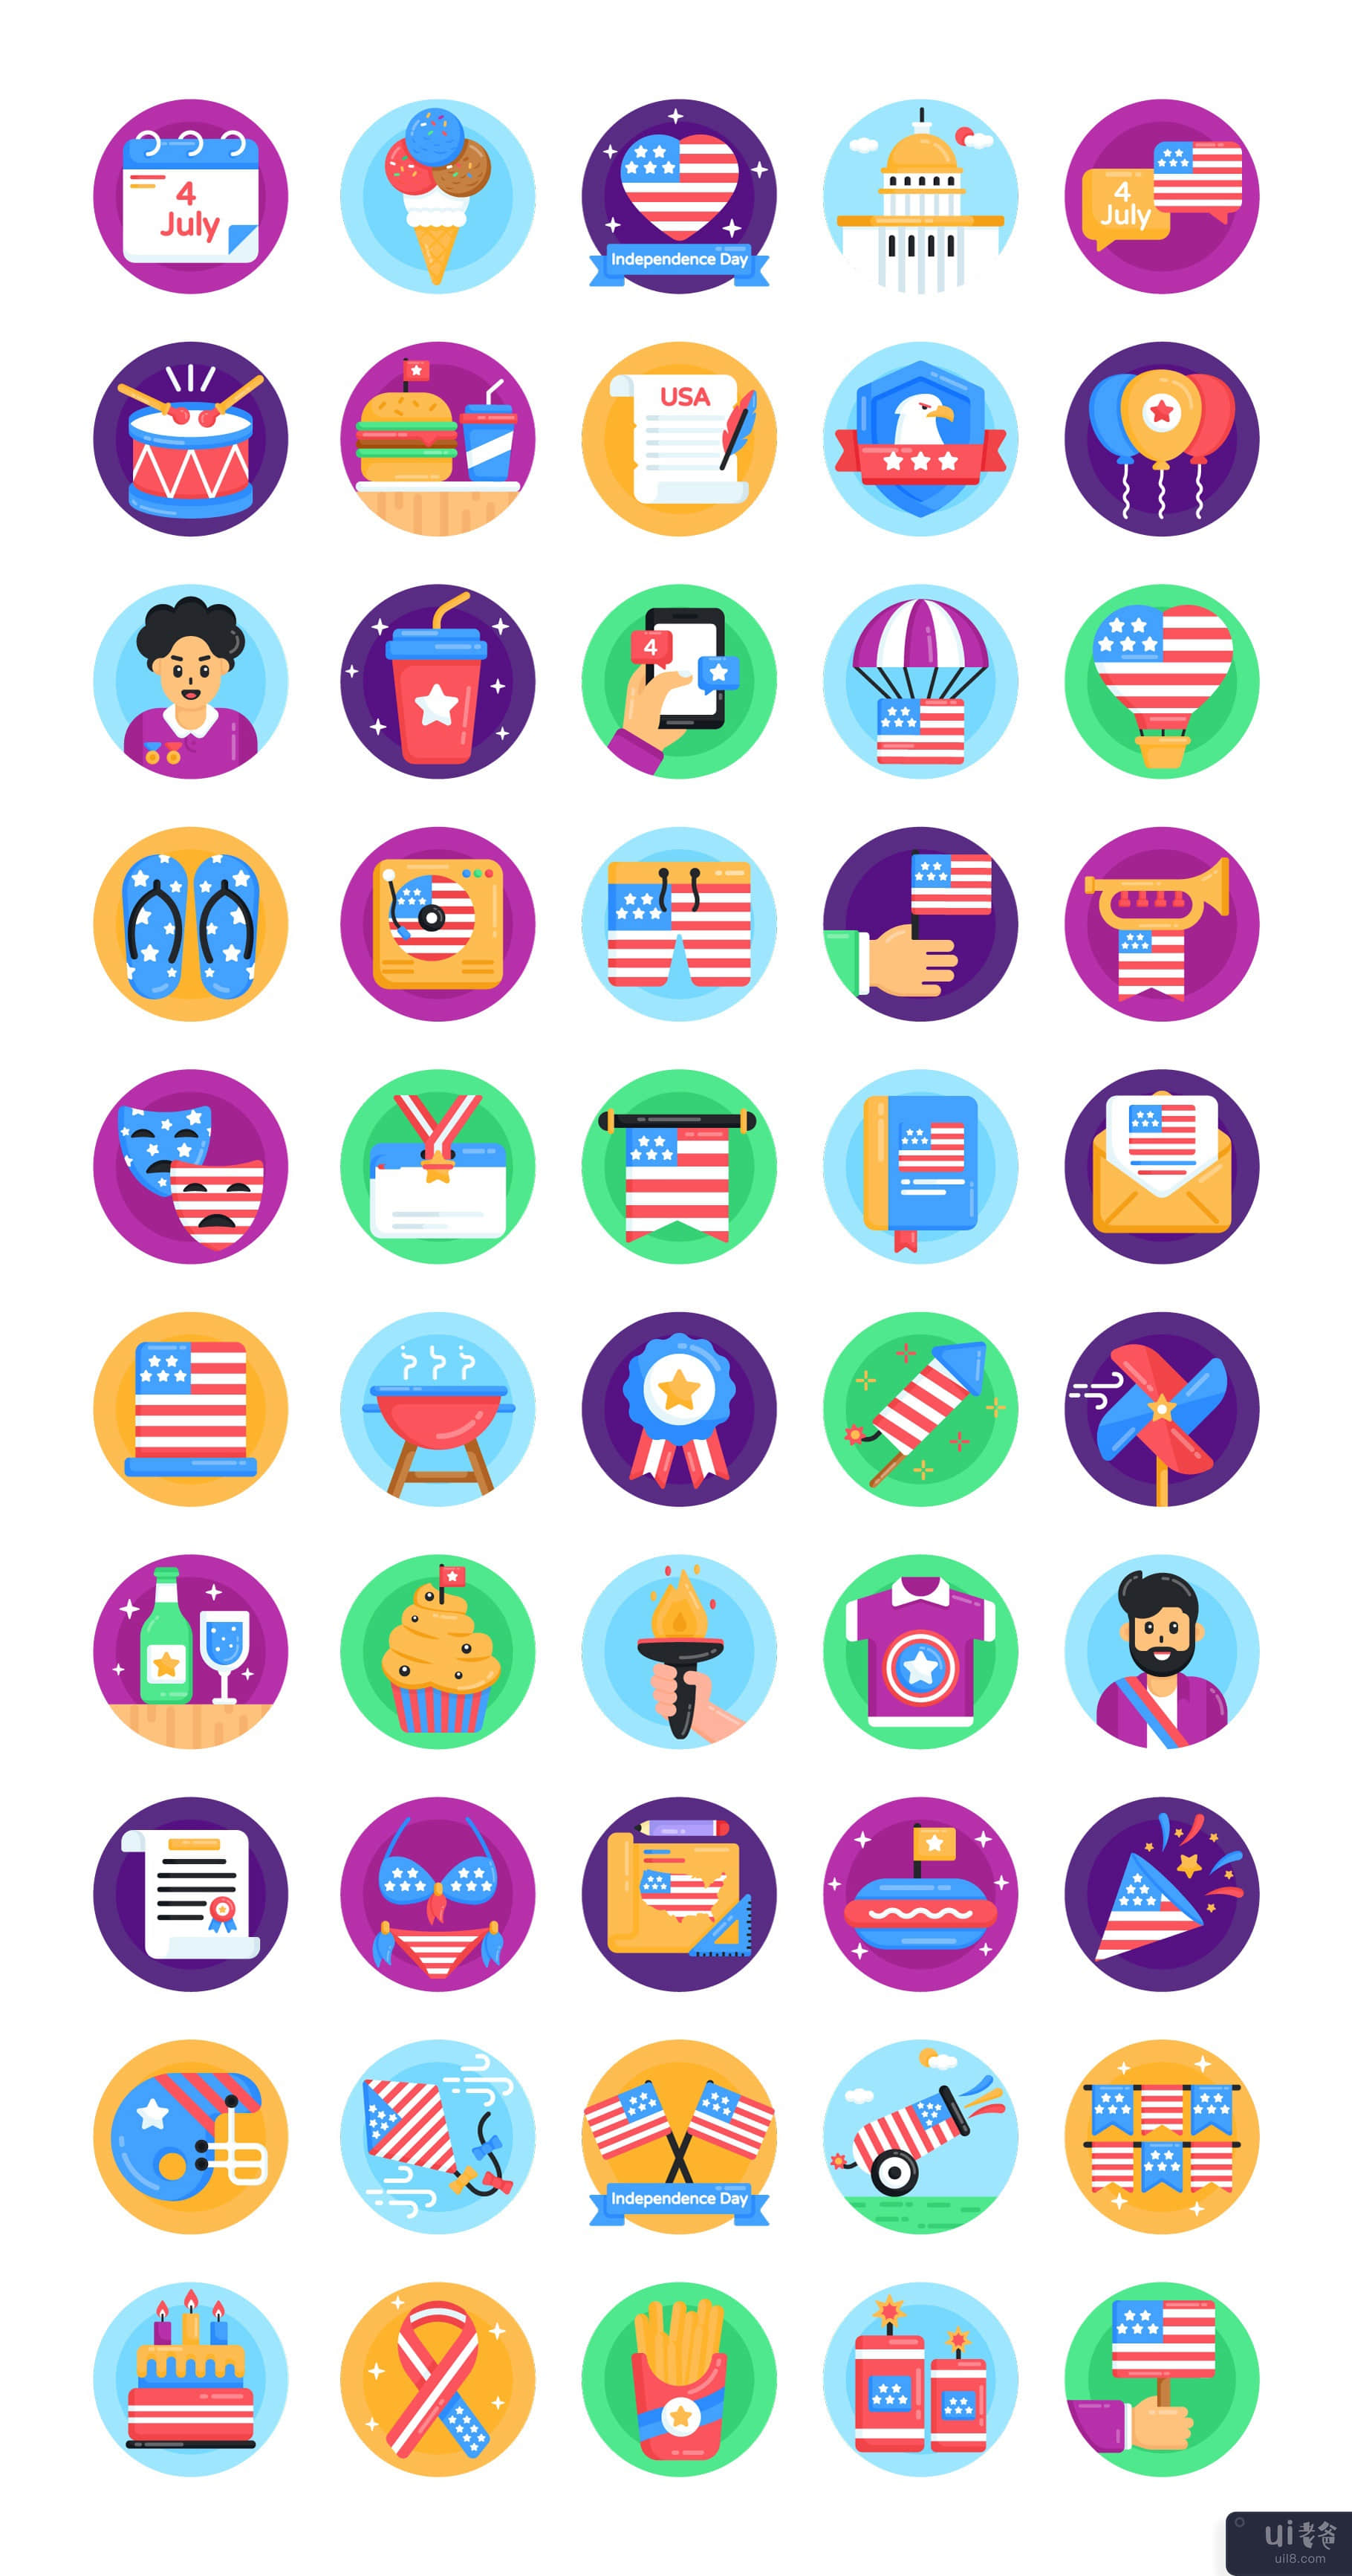 50 美国独立日矢量图标(50 USA Independence Day Vector Icons)插图